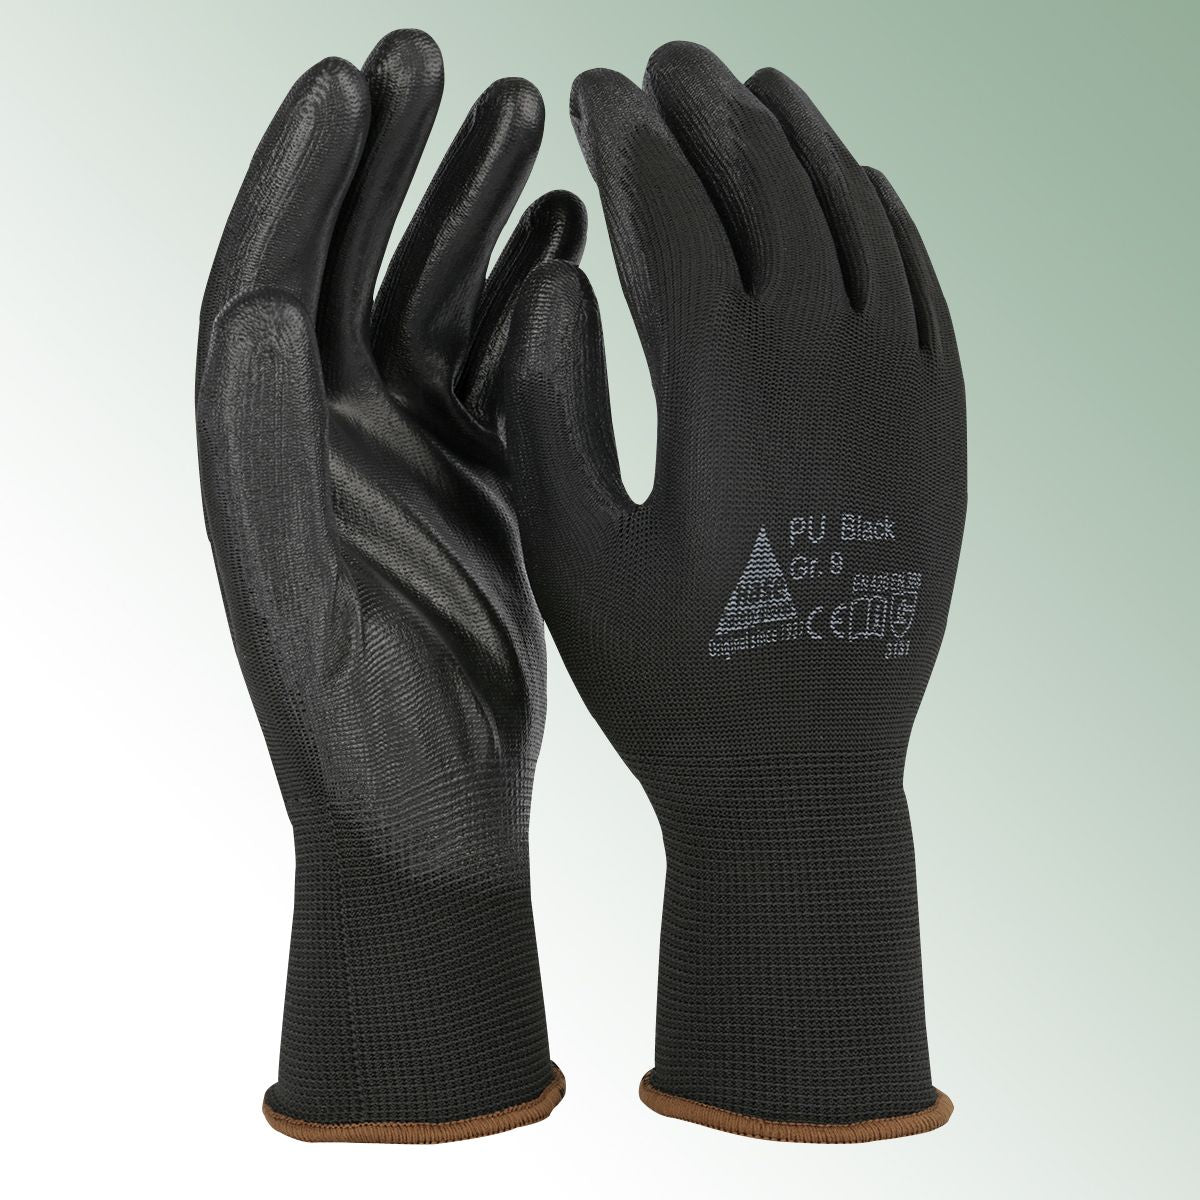 Gloves - PU Black -Size 7